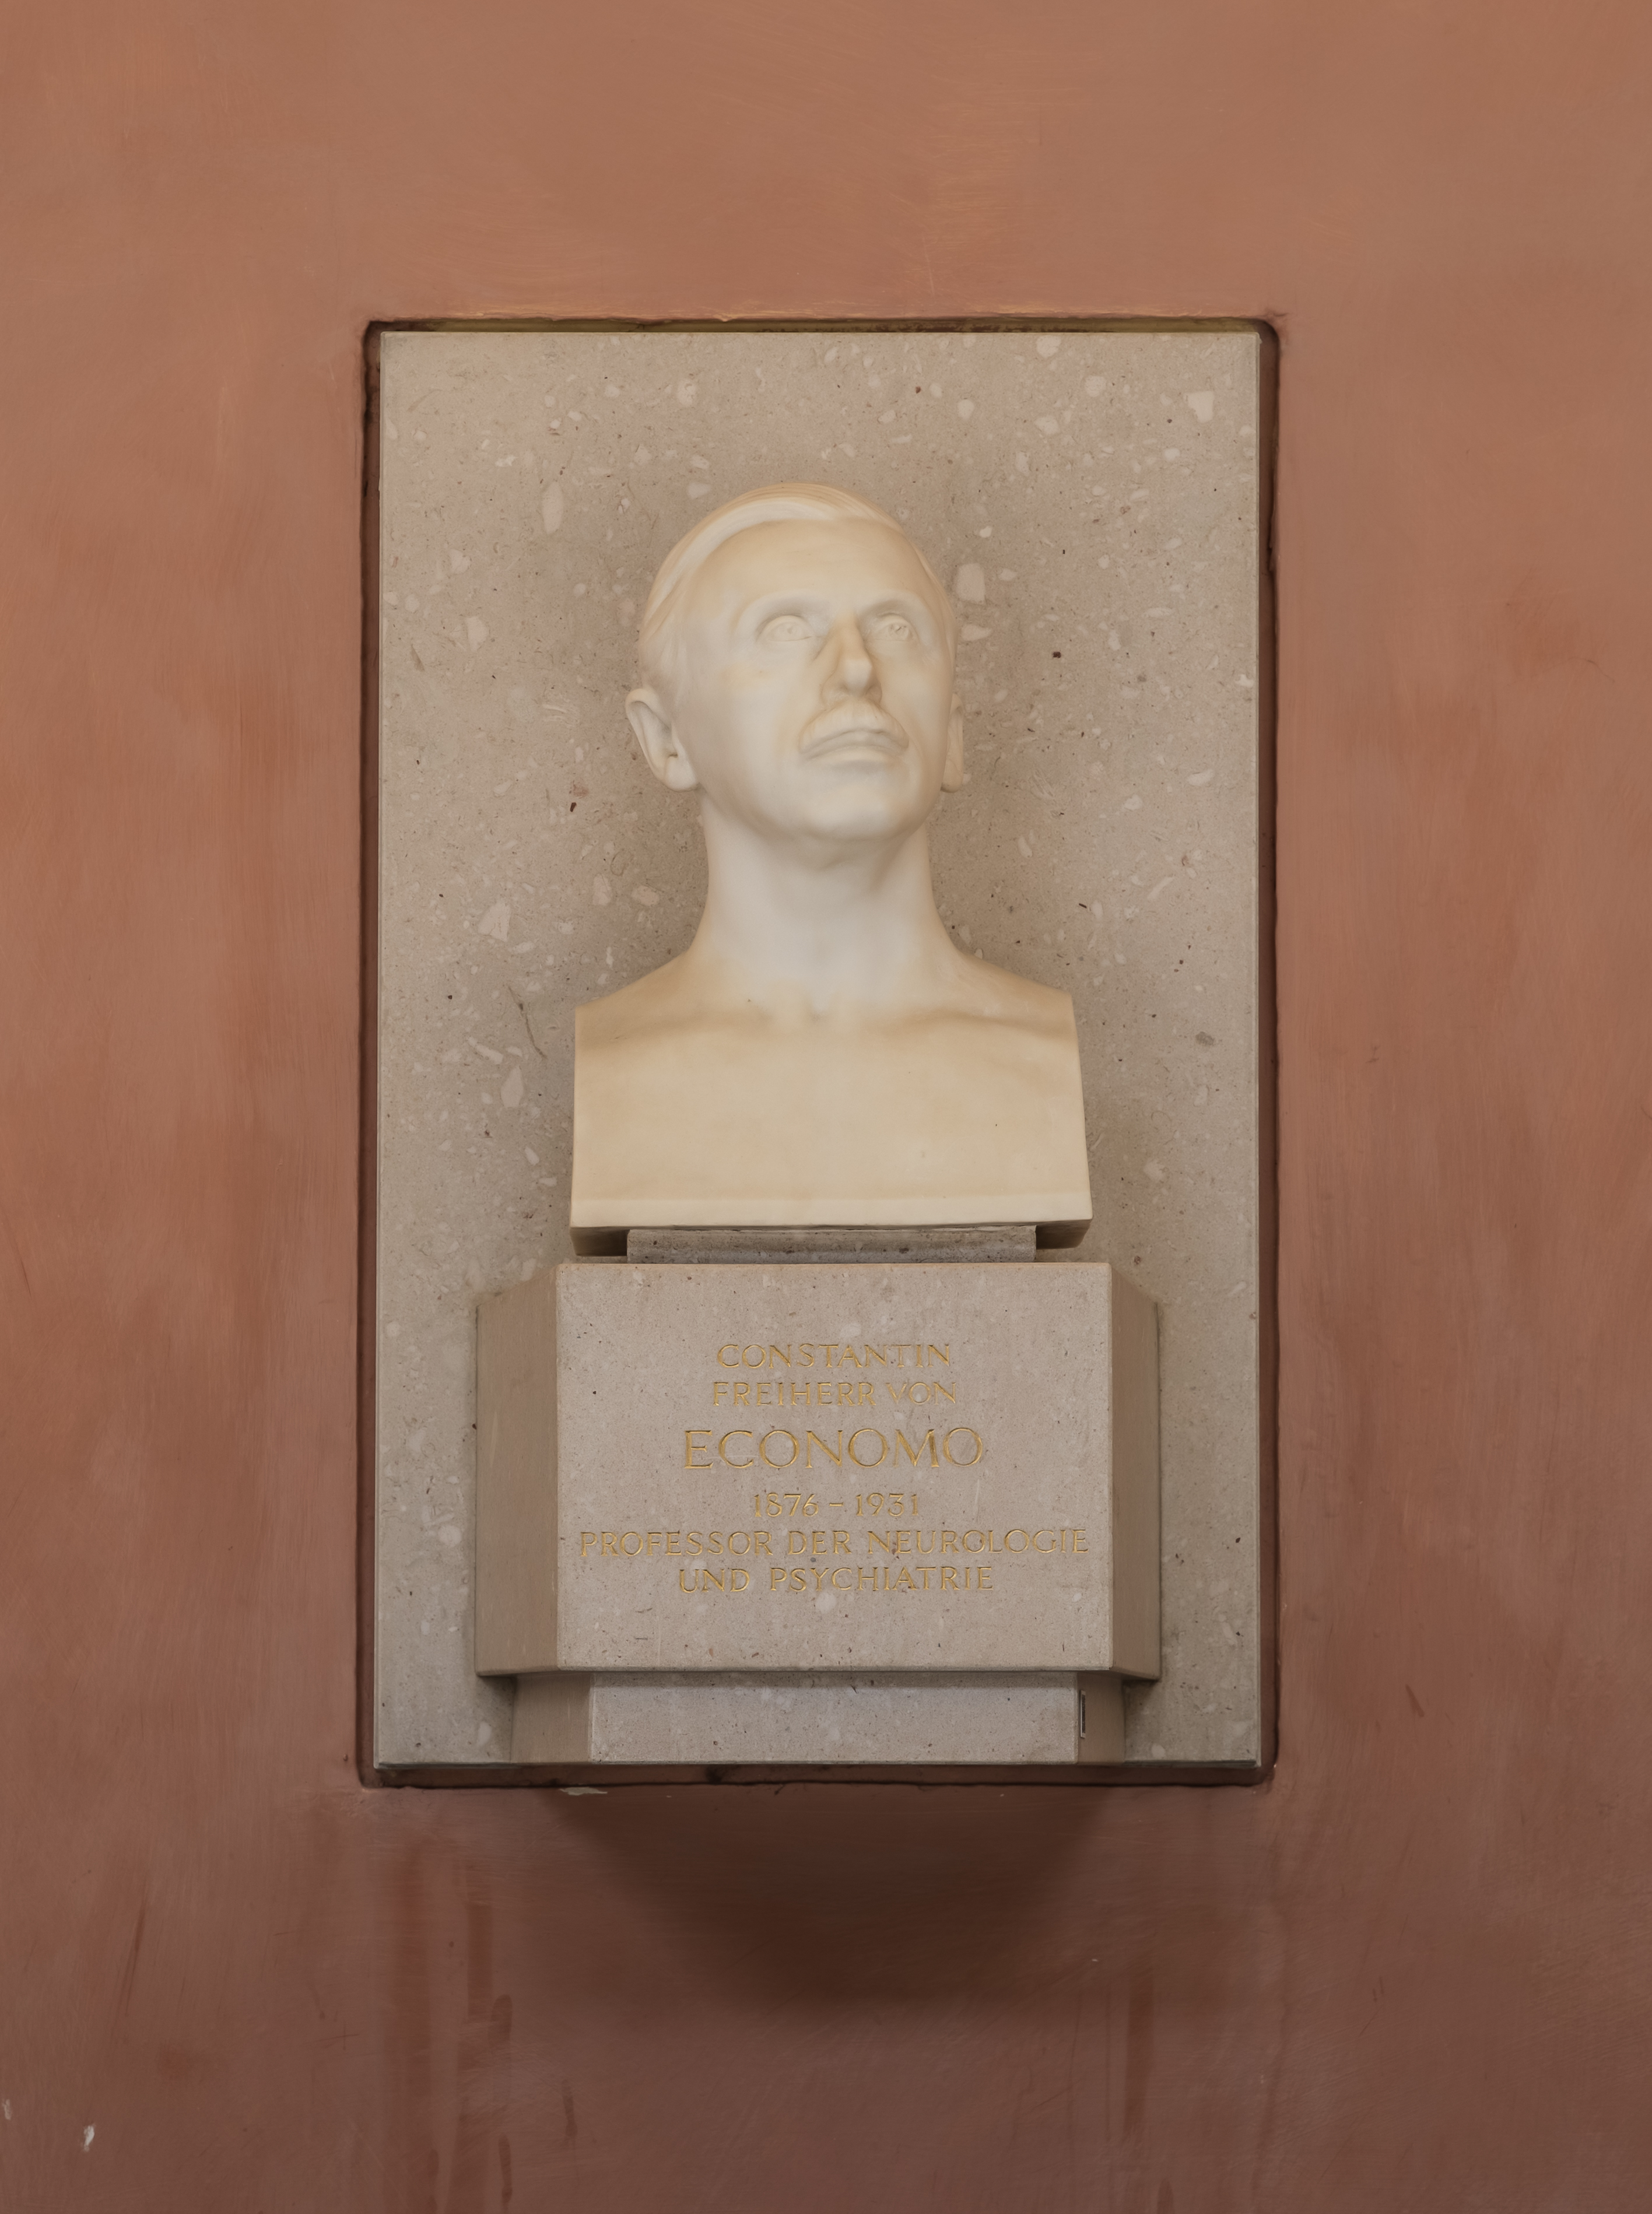 Constantin von Economo (1865-1935), Nr. 139, bust (marble) in the Arkadenhof of the University of Vienna-3264-HDR